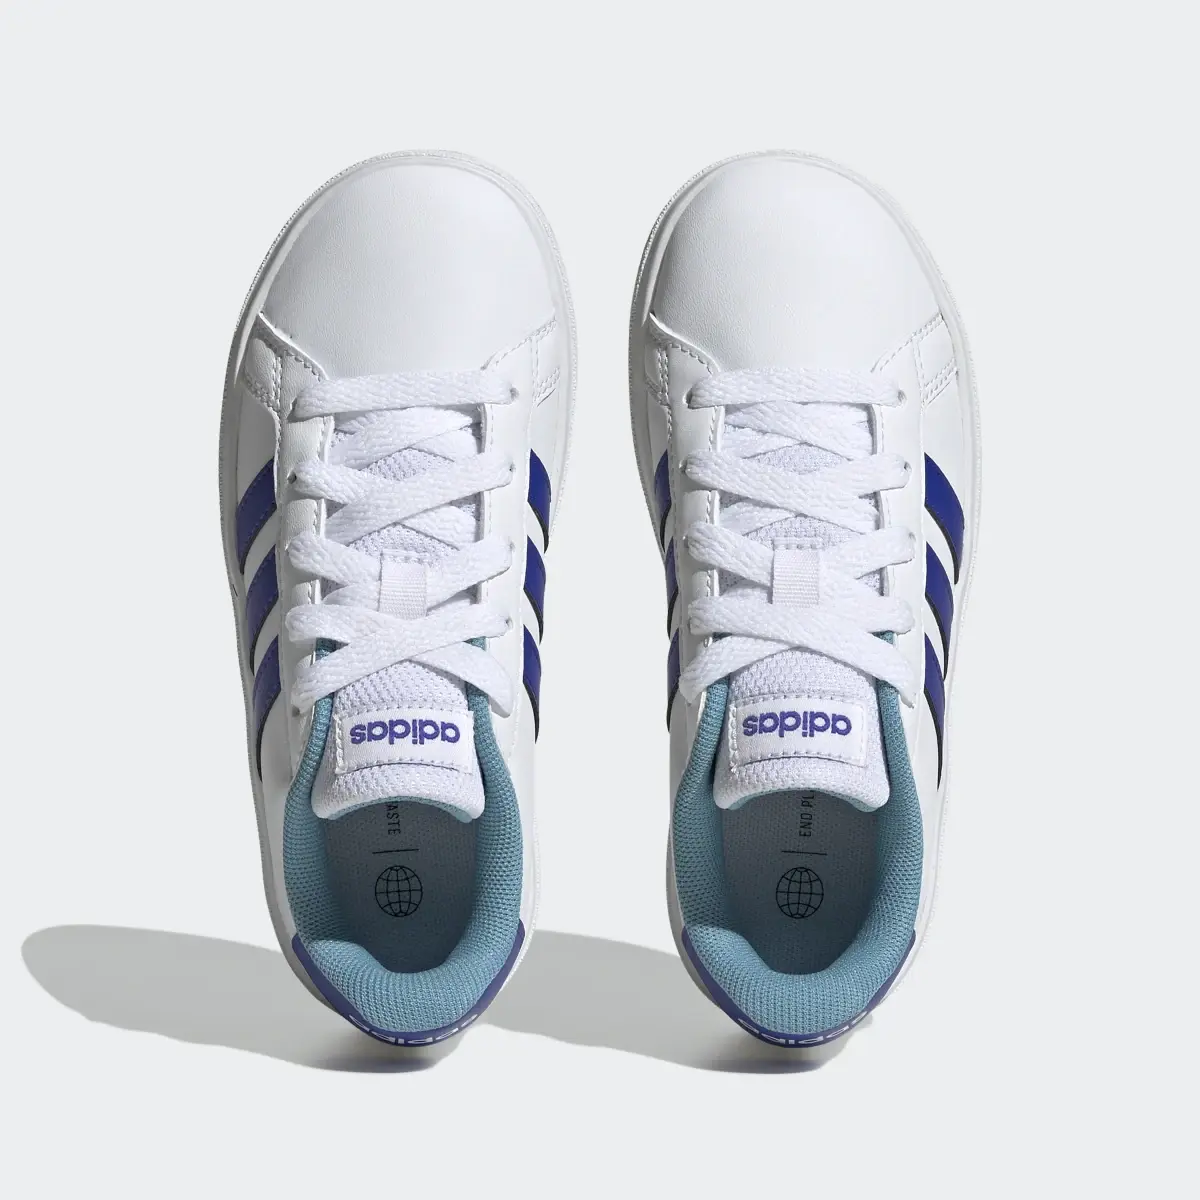 Adidas Scarpe da tennis Grand Court Lifestyle Lace-Up. 3